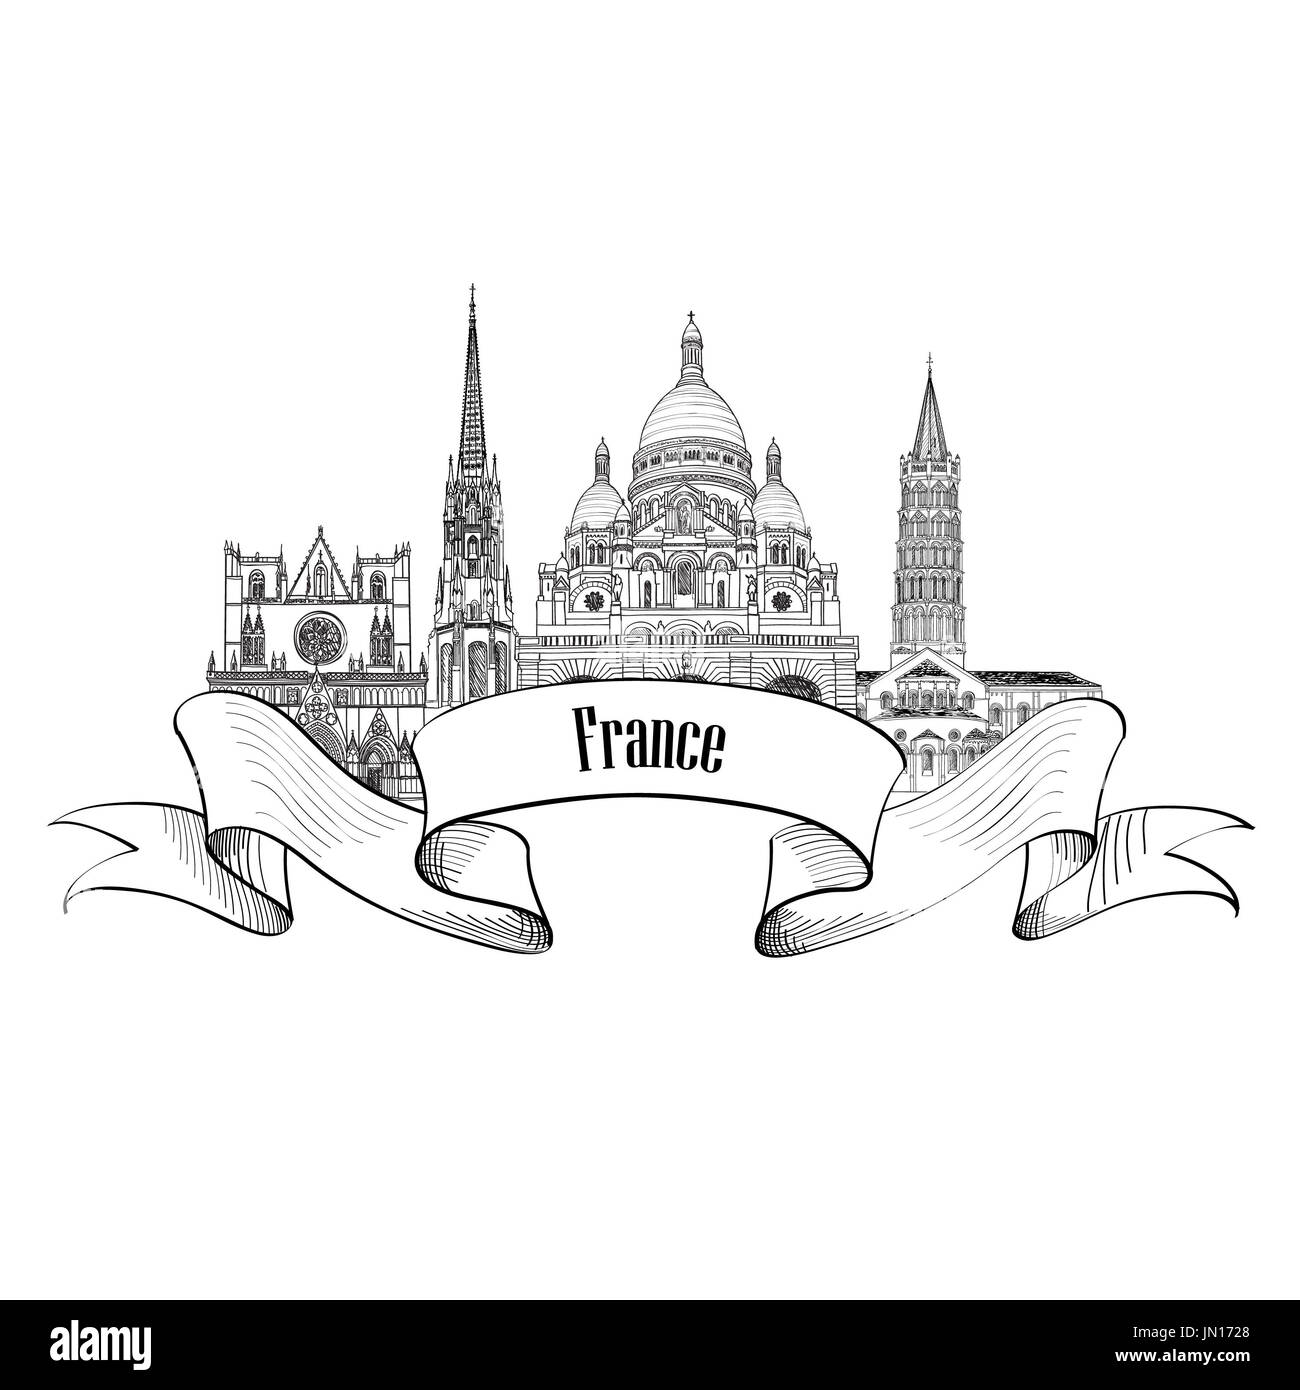 France label. Famous french architectural landmarks. Visit France banner. Stock Photo